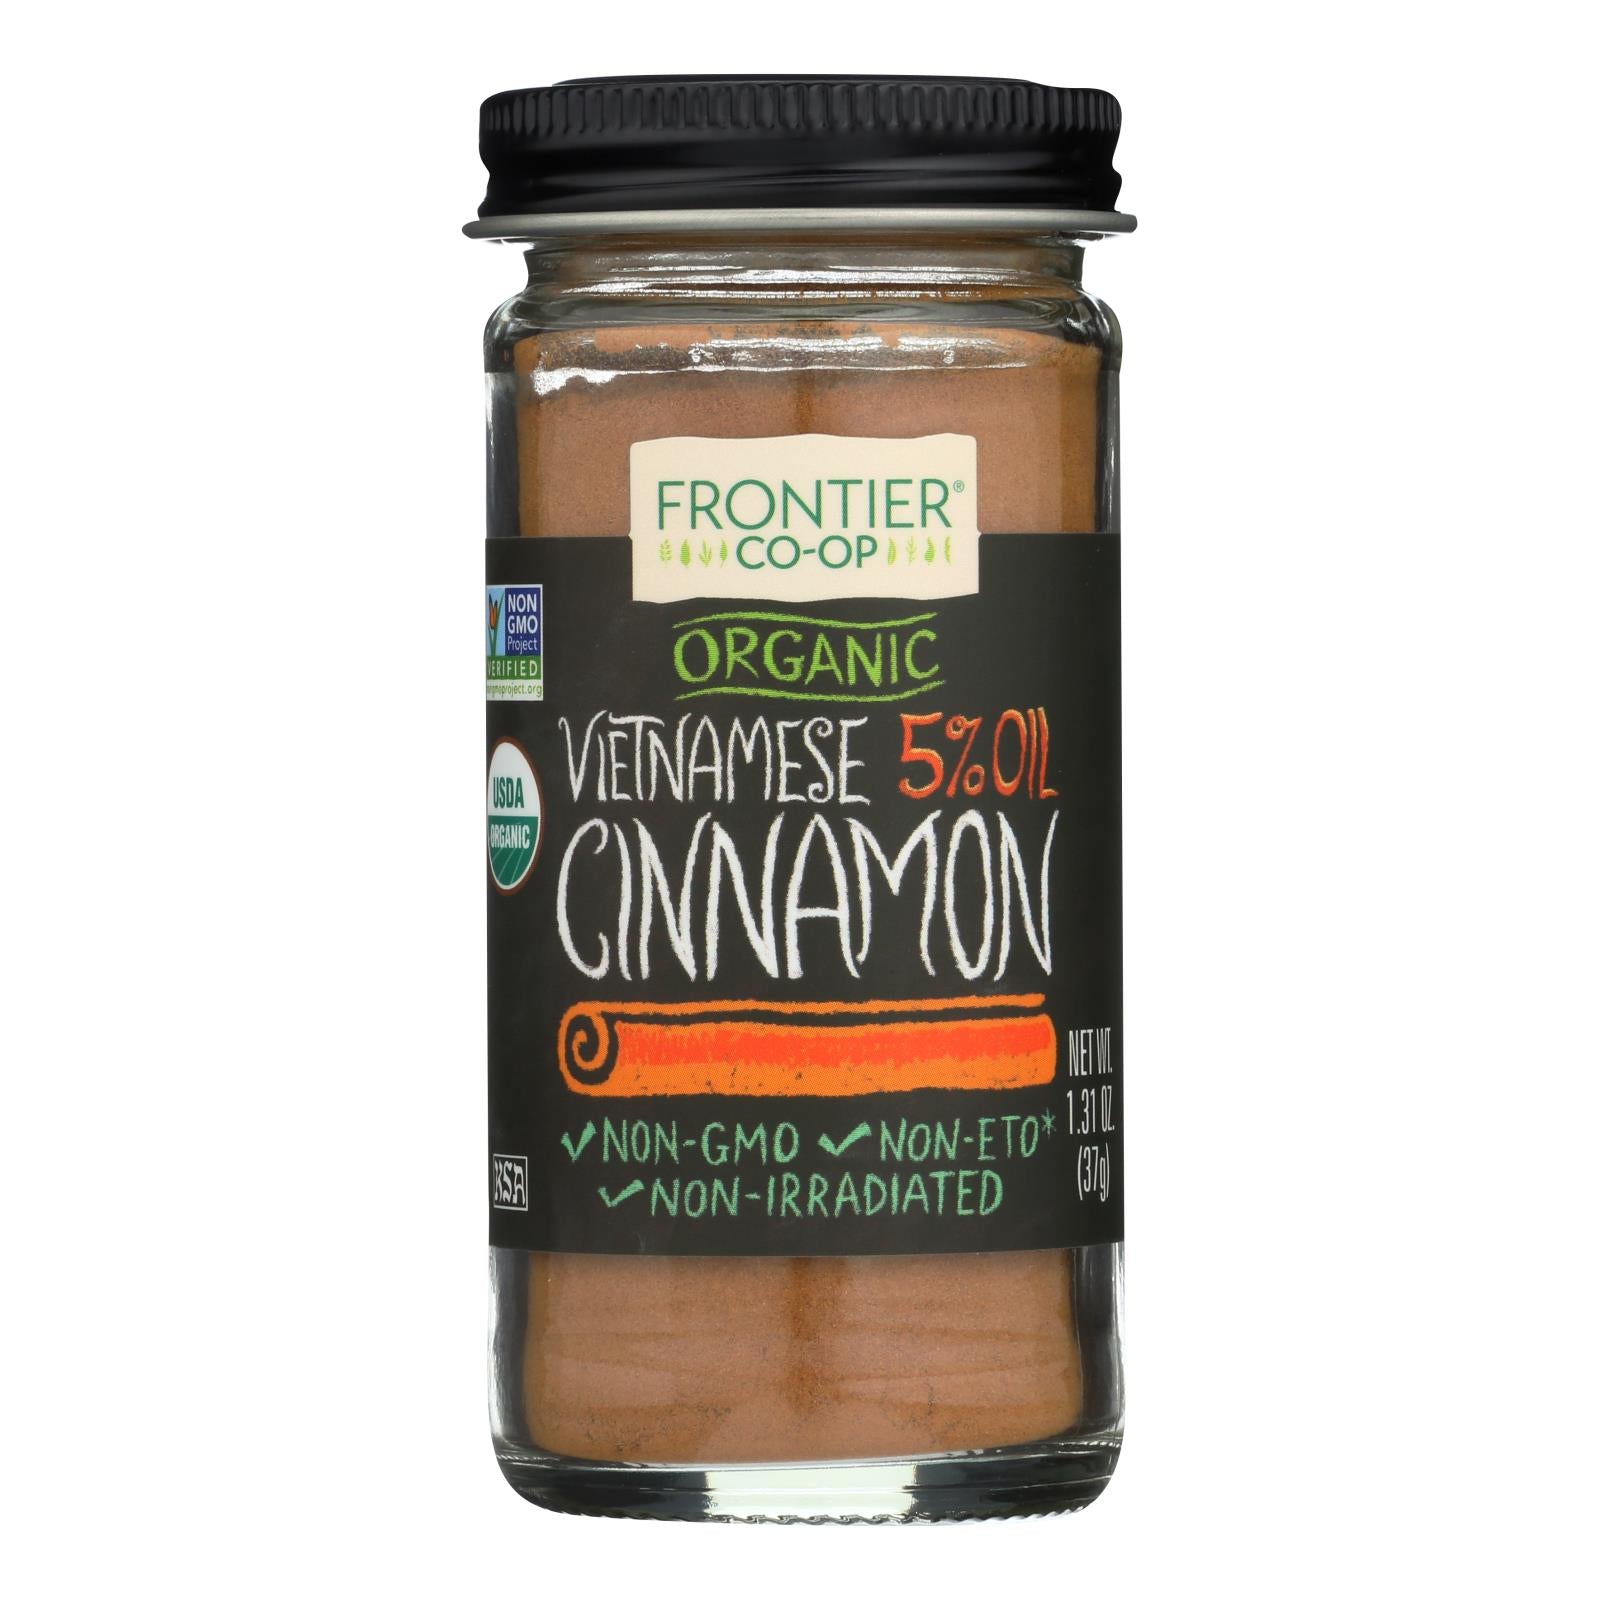 Frontier Herb Cinnamon - Organic - Ground - Vietnamese - 5 Percent Oil - 1.31 Oz - Whole Green Foods